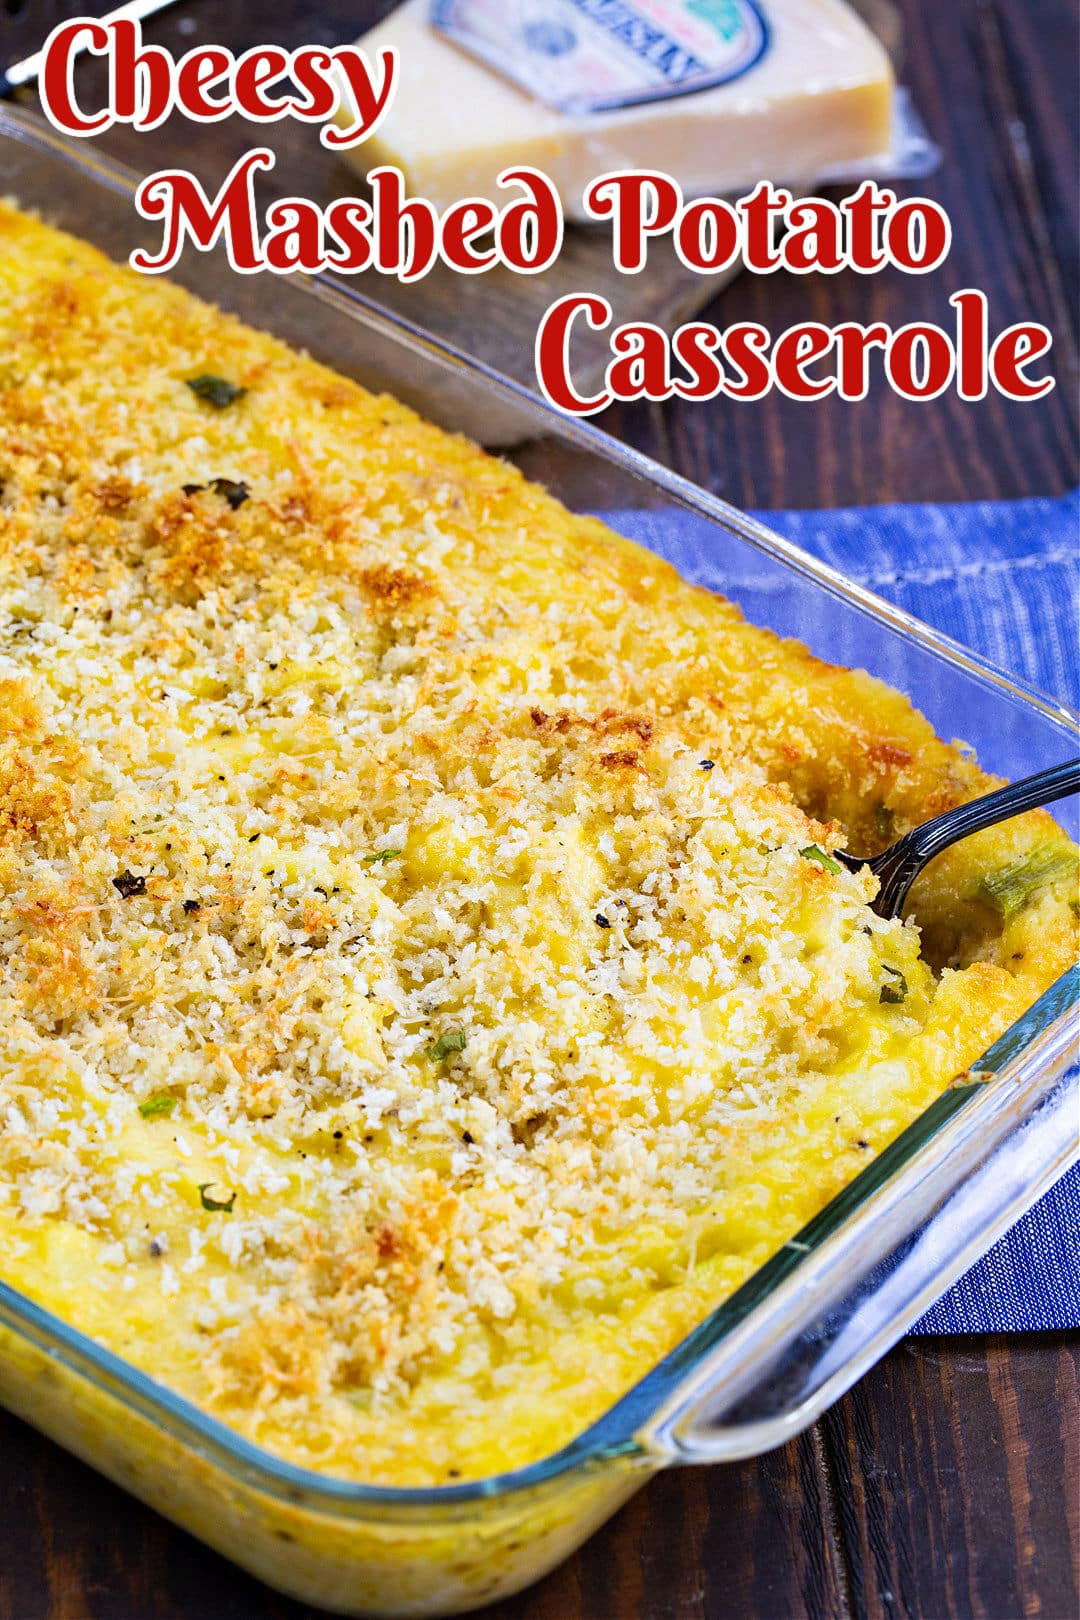 Cheesy Mashed Potato Casserole in casserole dish.